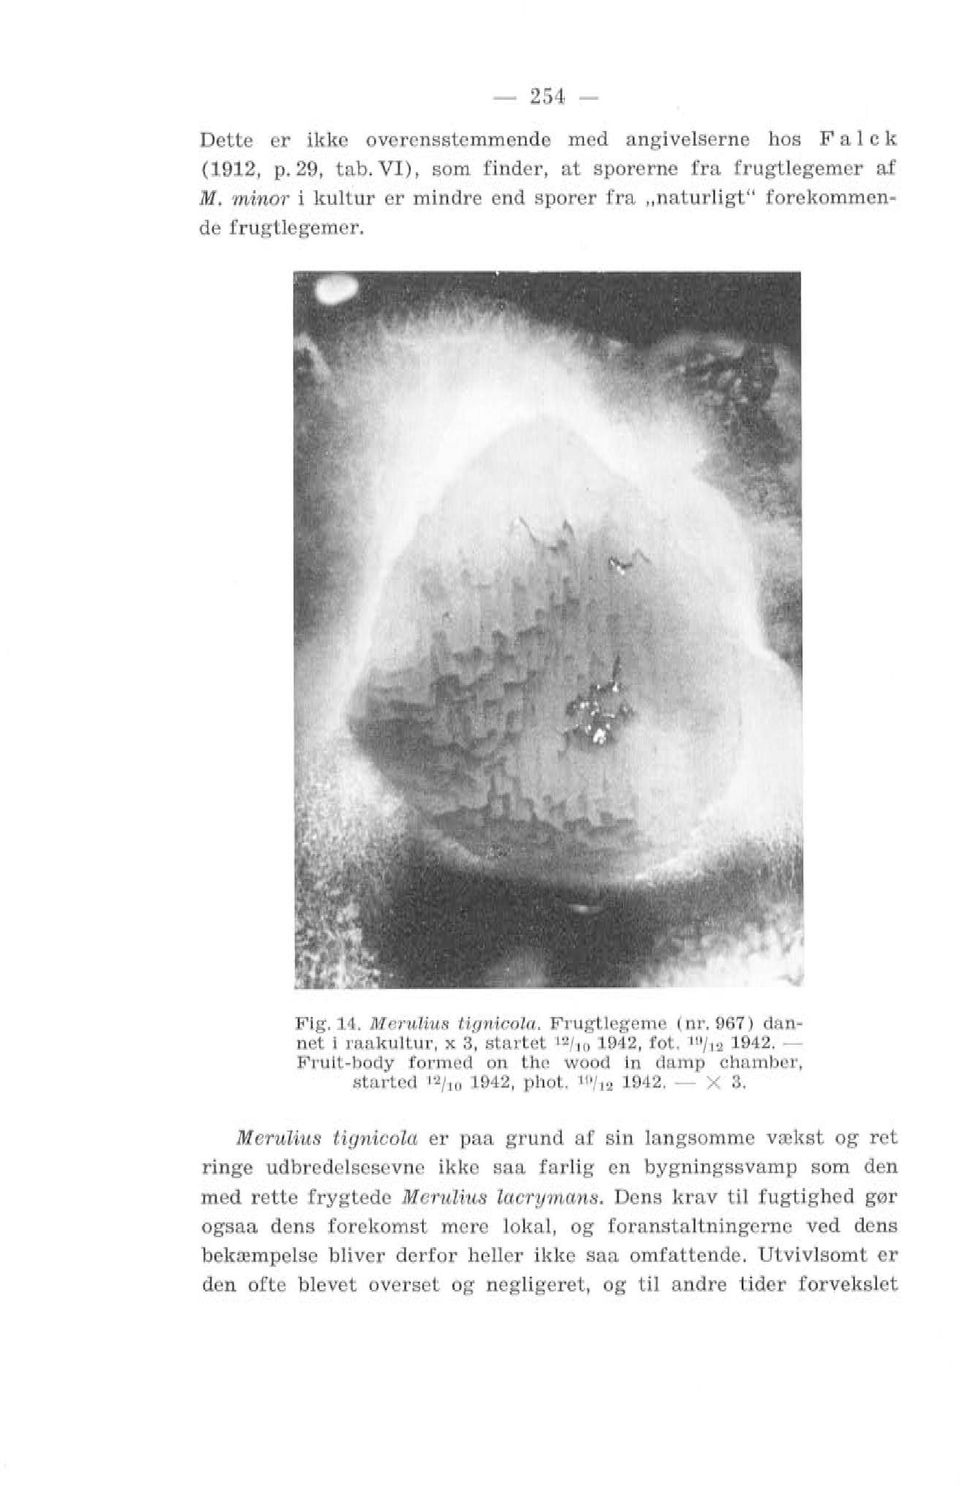 Fruit-body formed on the wood in damp chamber, start ed 12 / 10 1942, phot. 19 1t2 1942. - X 3.